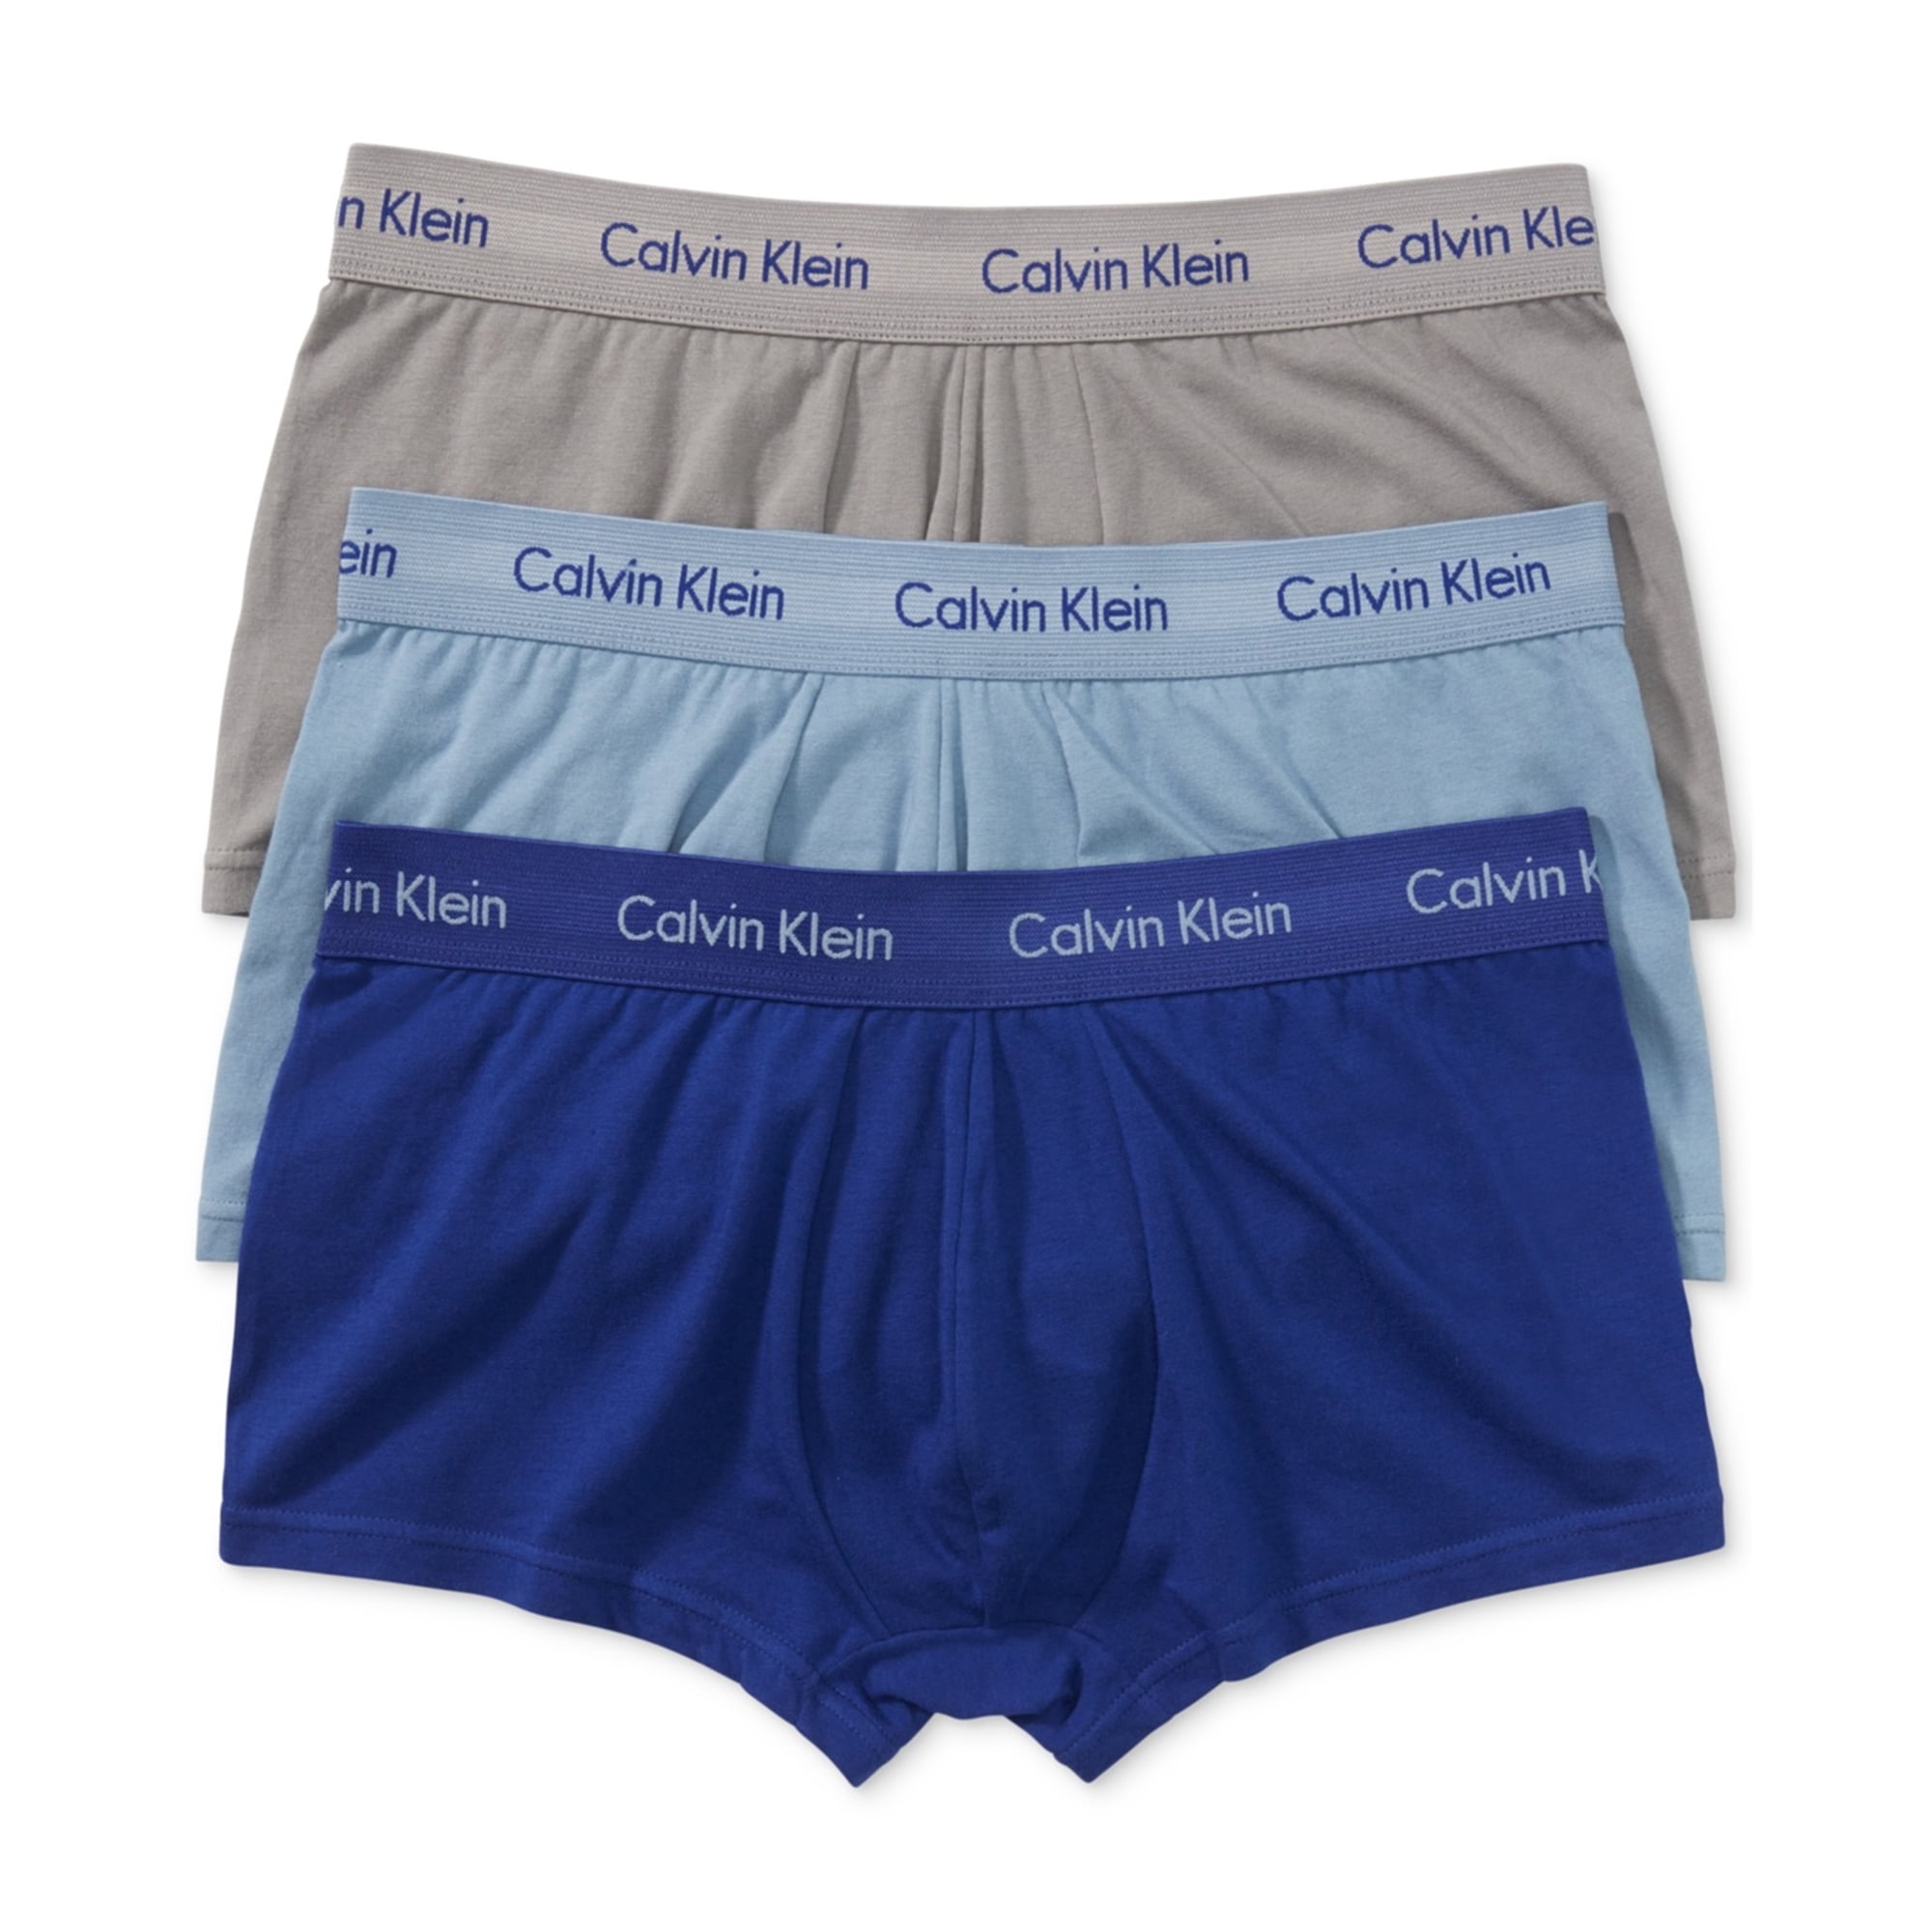 Calvin Klein Men's Cotton Stretch Low Rise Trunks (3-Pack